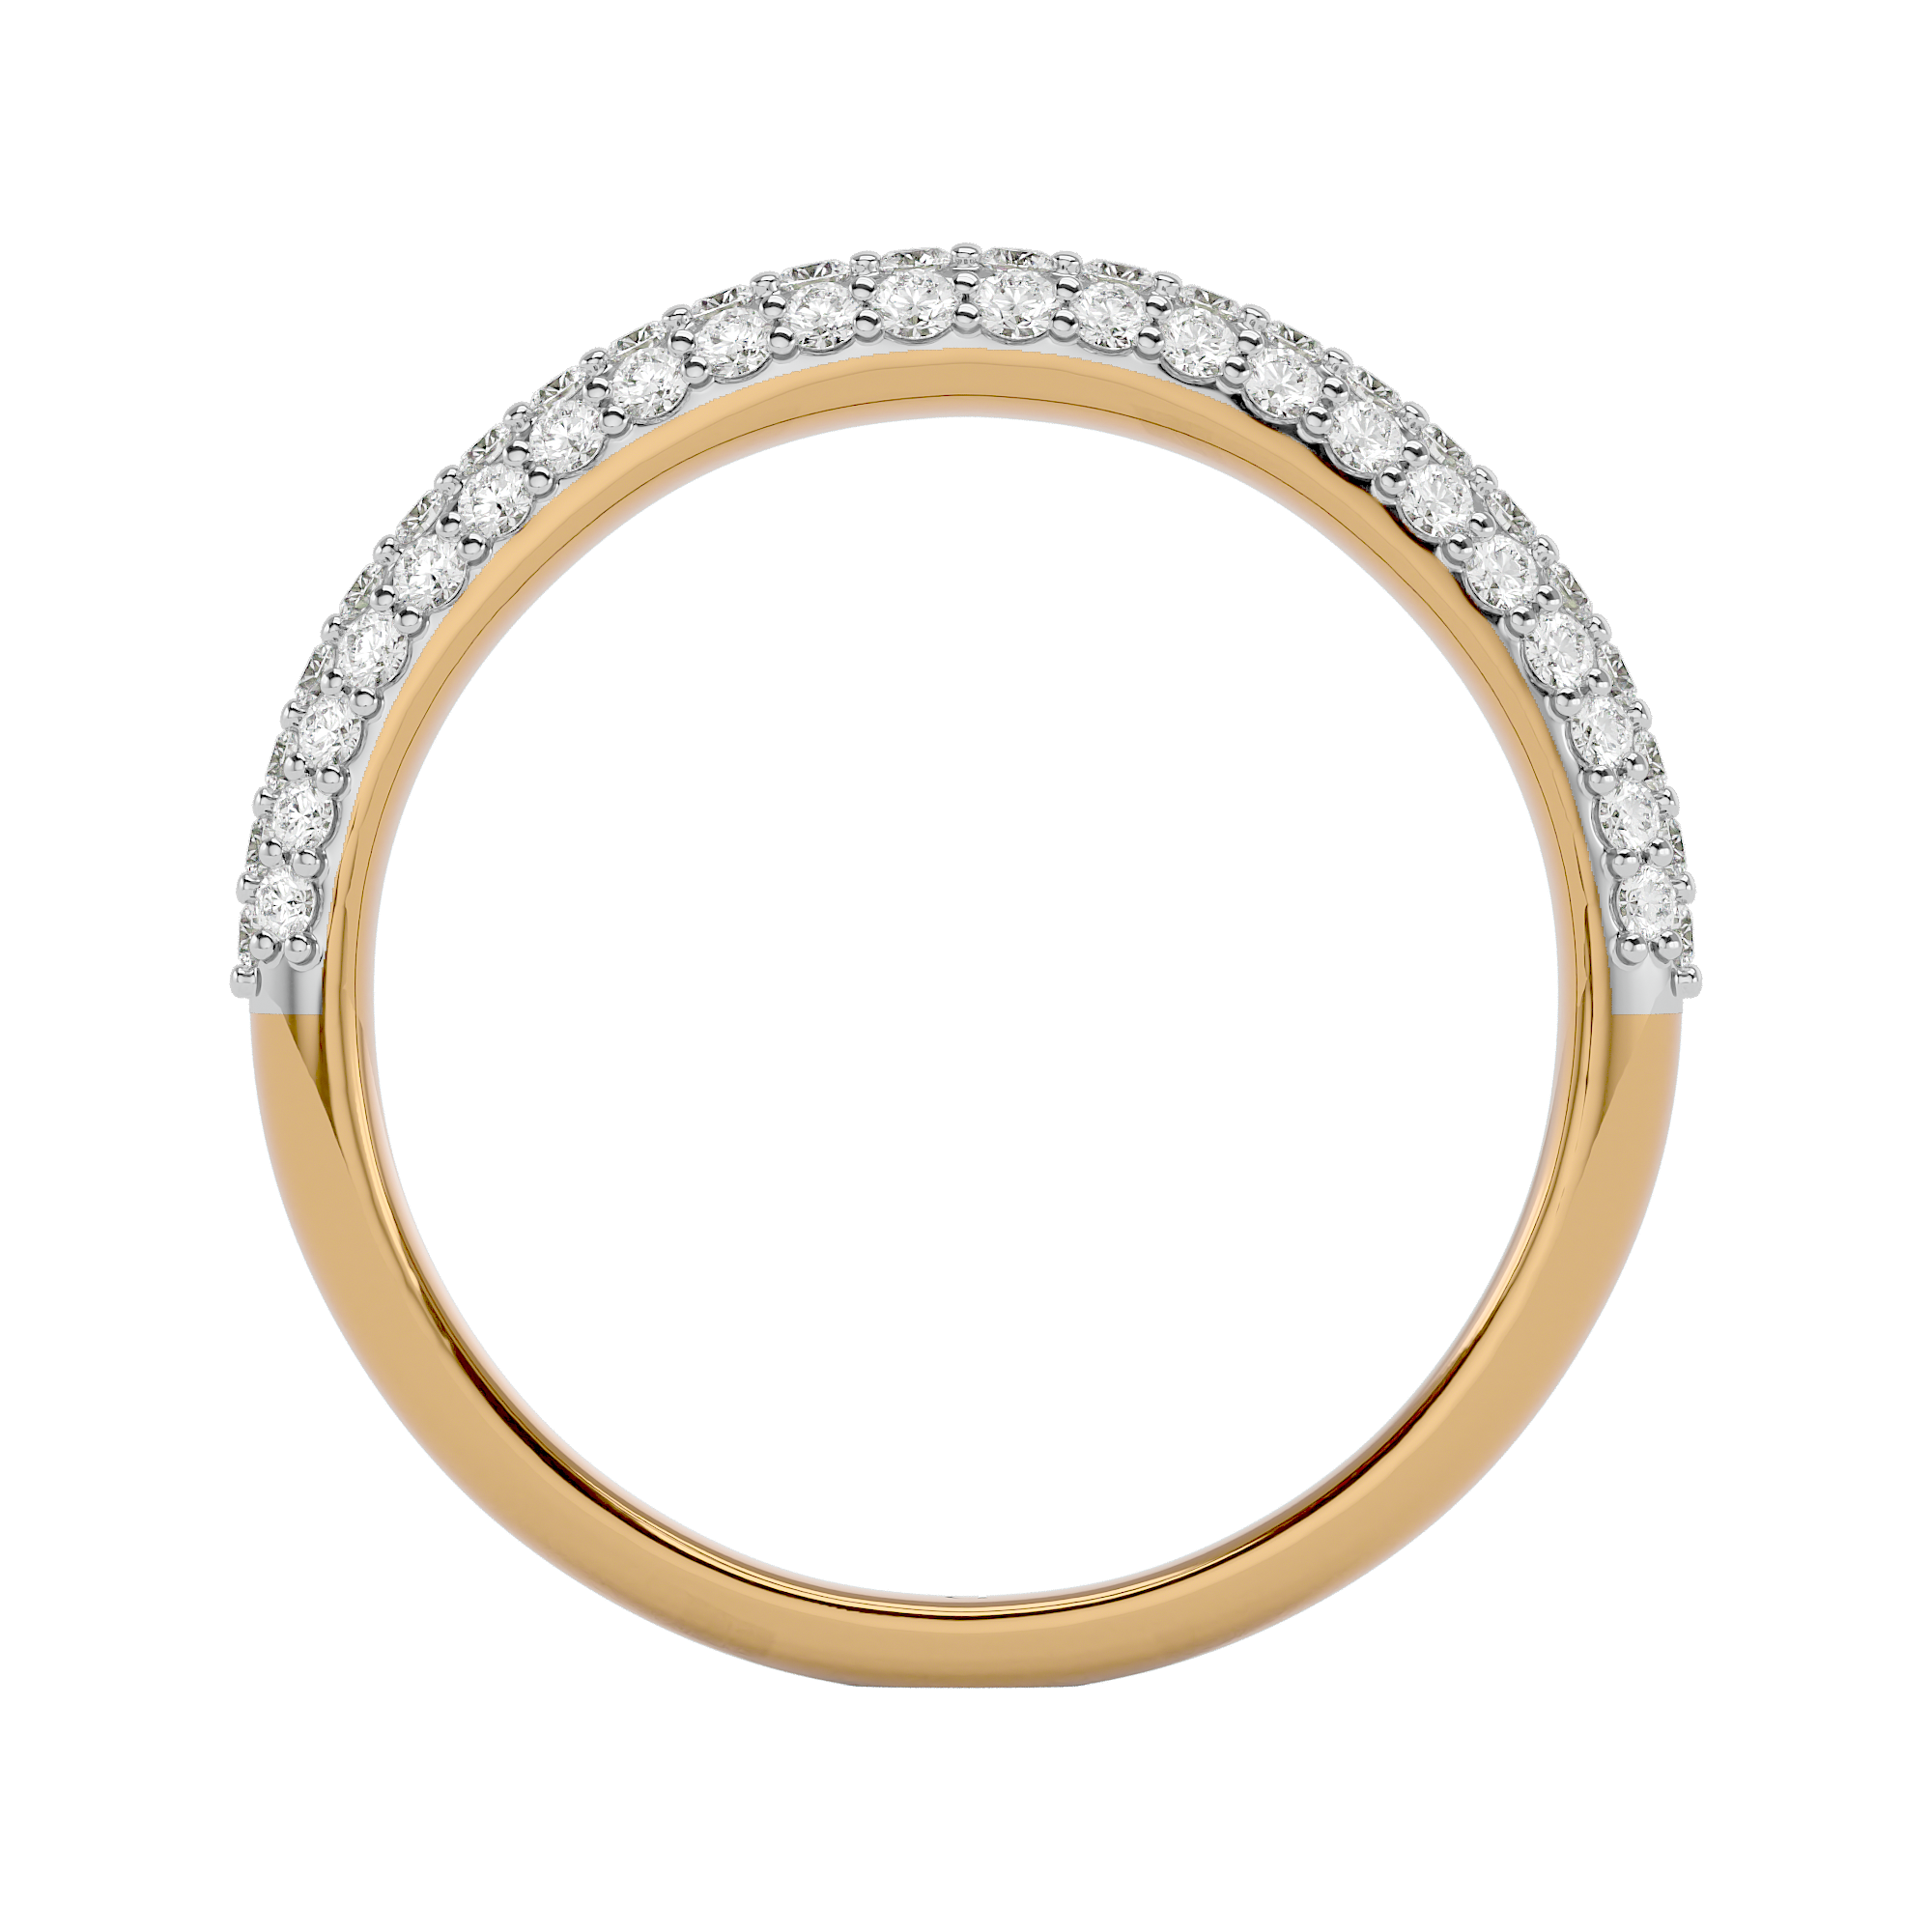 1 Carat Round Cut Diamond Ring in 14kt Yellow Gold - Blu Diamonds